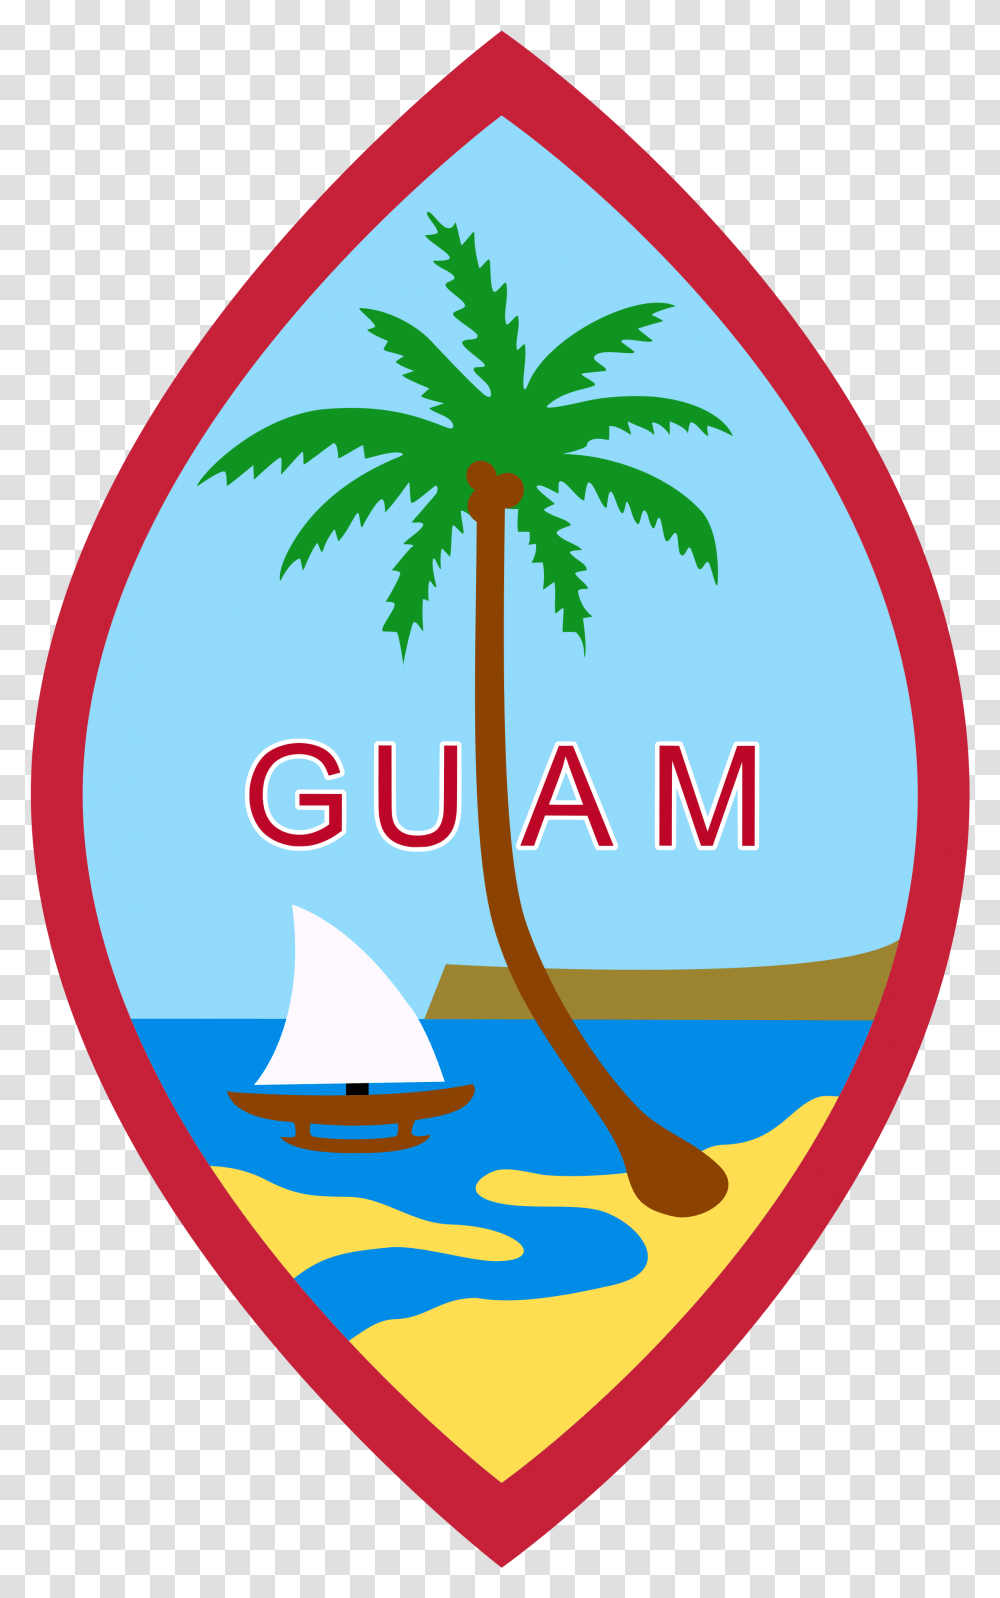 Guam Seal Guam Coat Of Arms, Plant, Food, Bottle, Egg Transparent Png